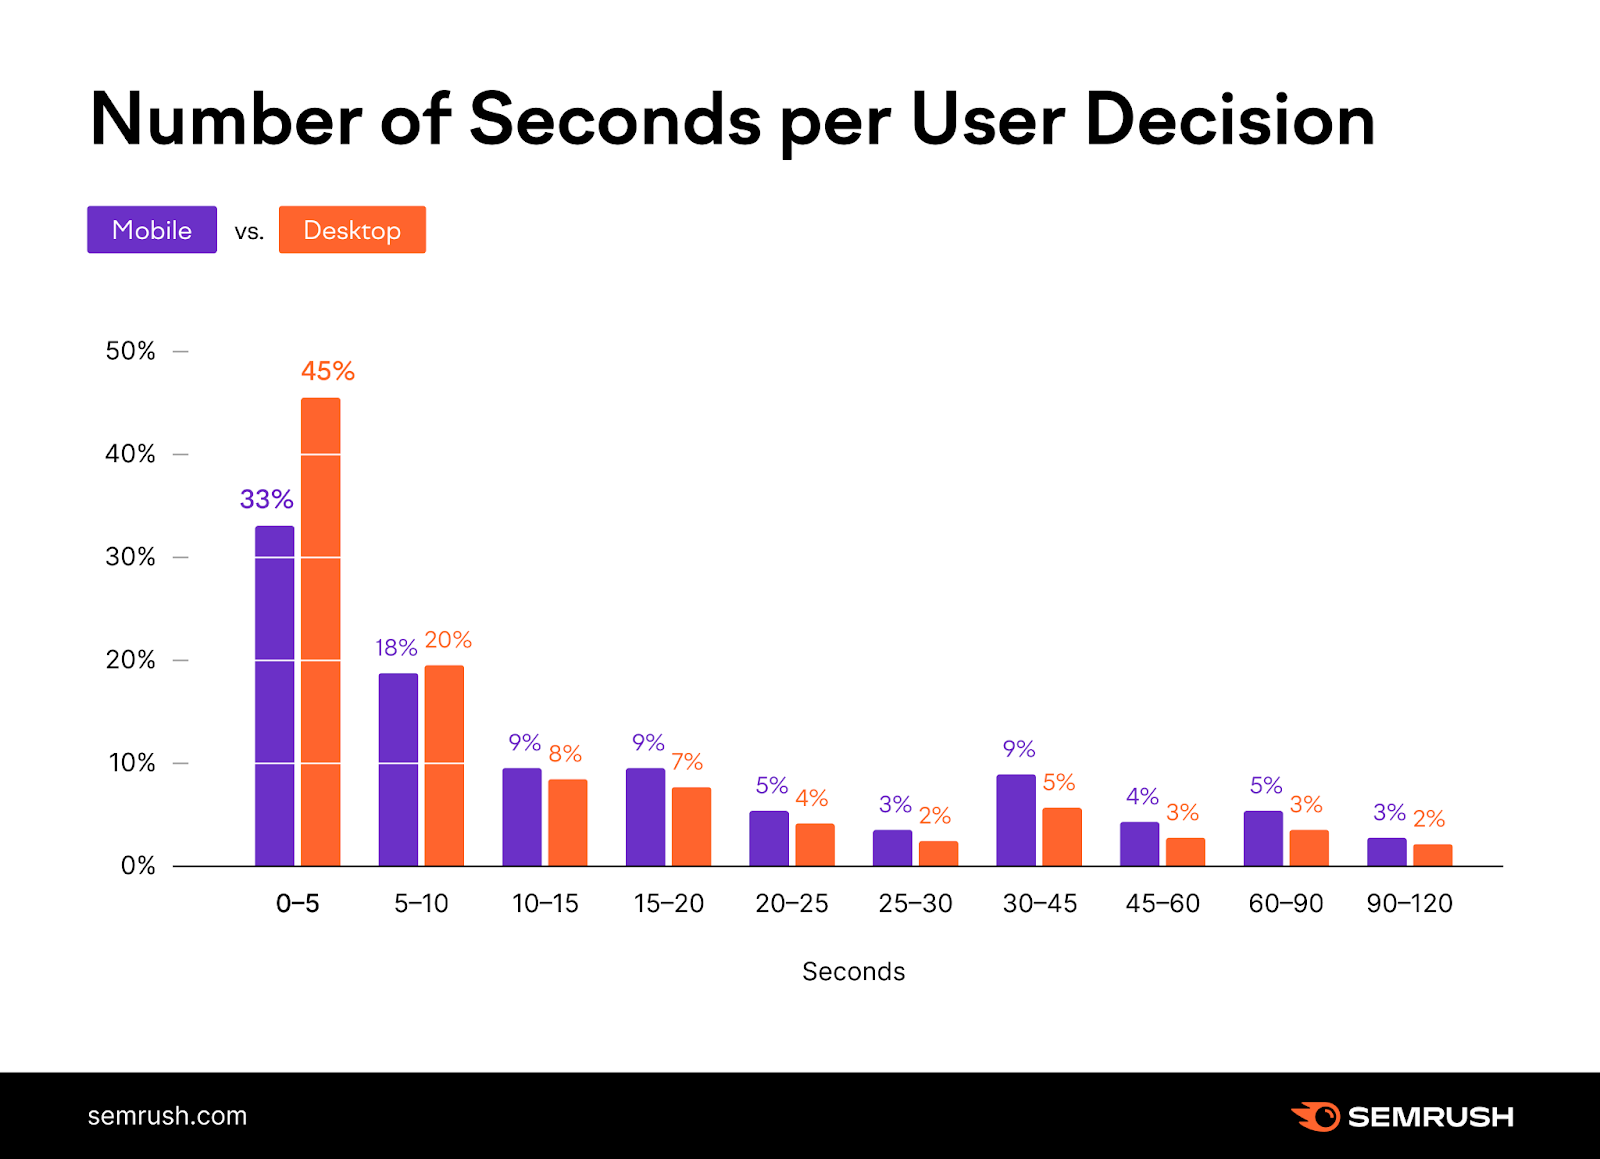 Semrush data showing number of seconds per user decision